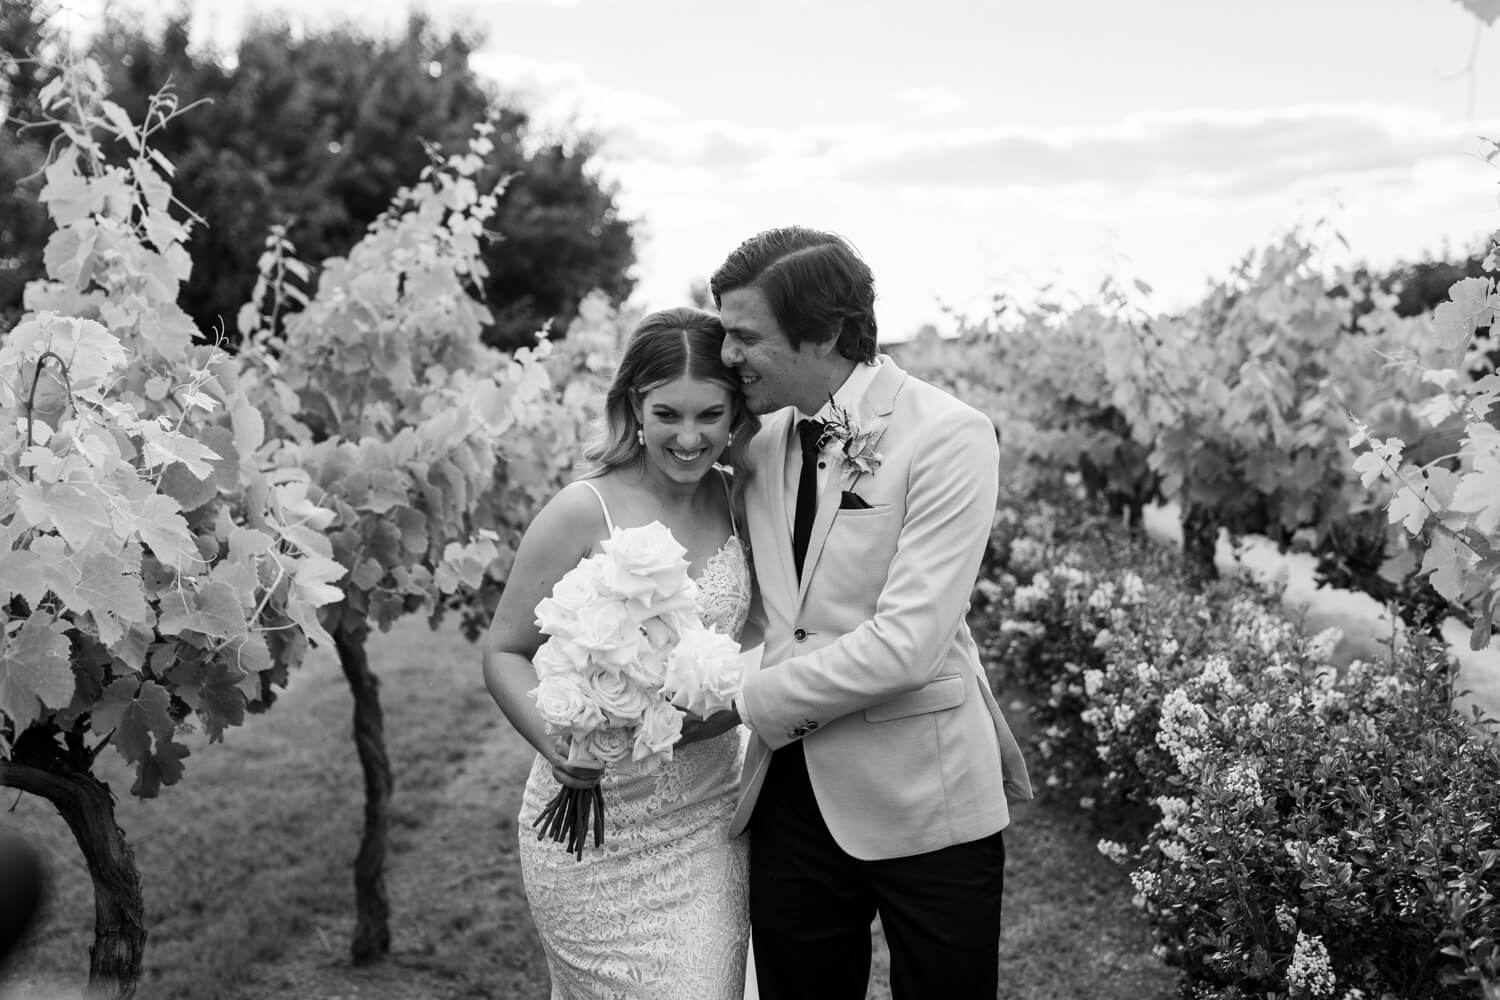 Courtney & Jake getting cute in the vinyards during their Blue Wren Mudgee Wedding